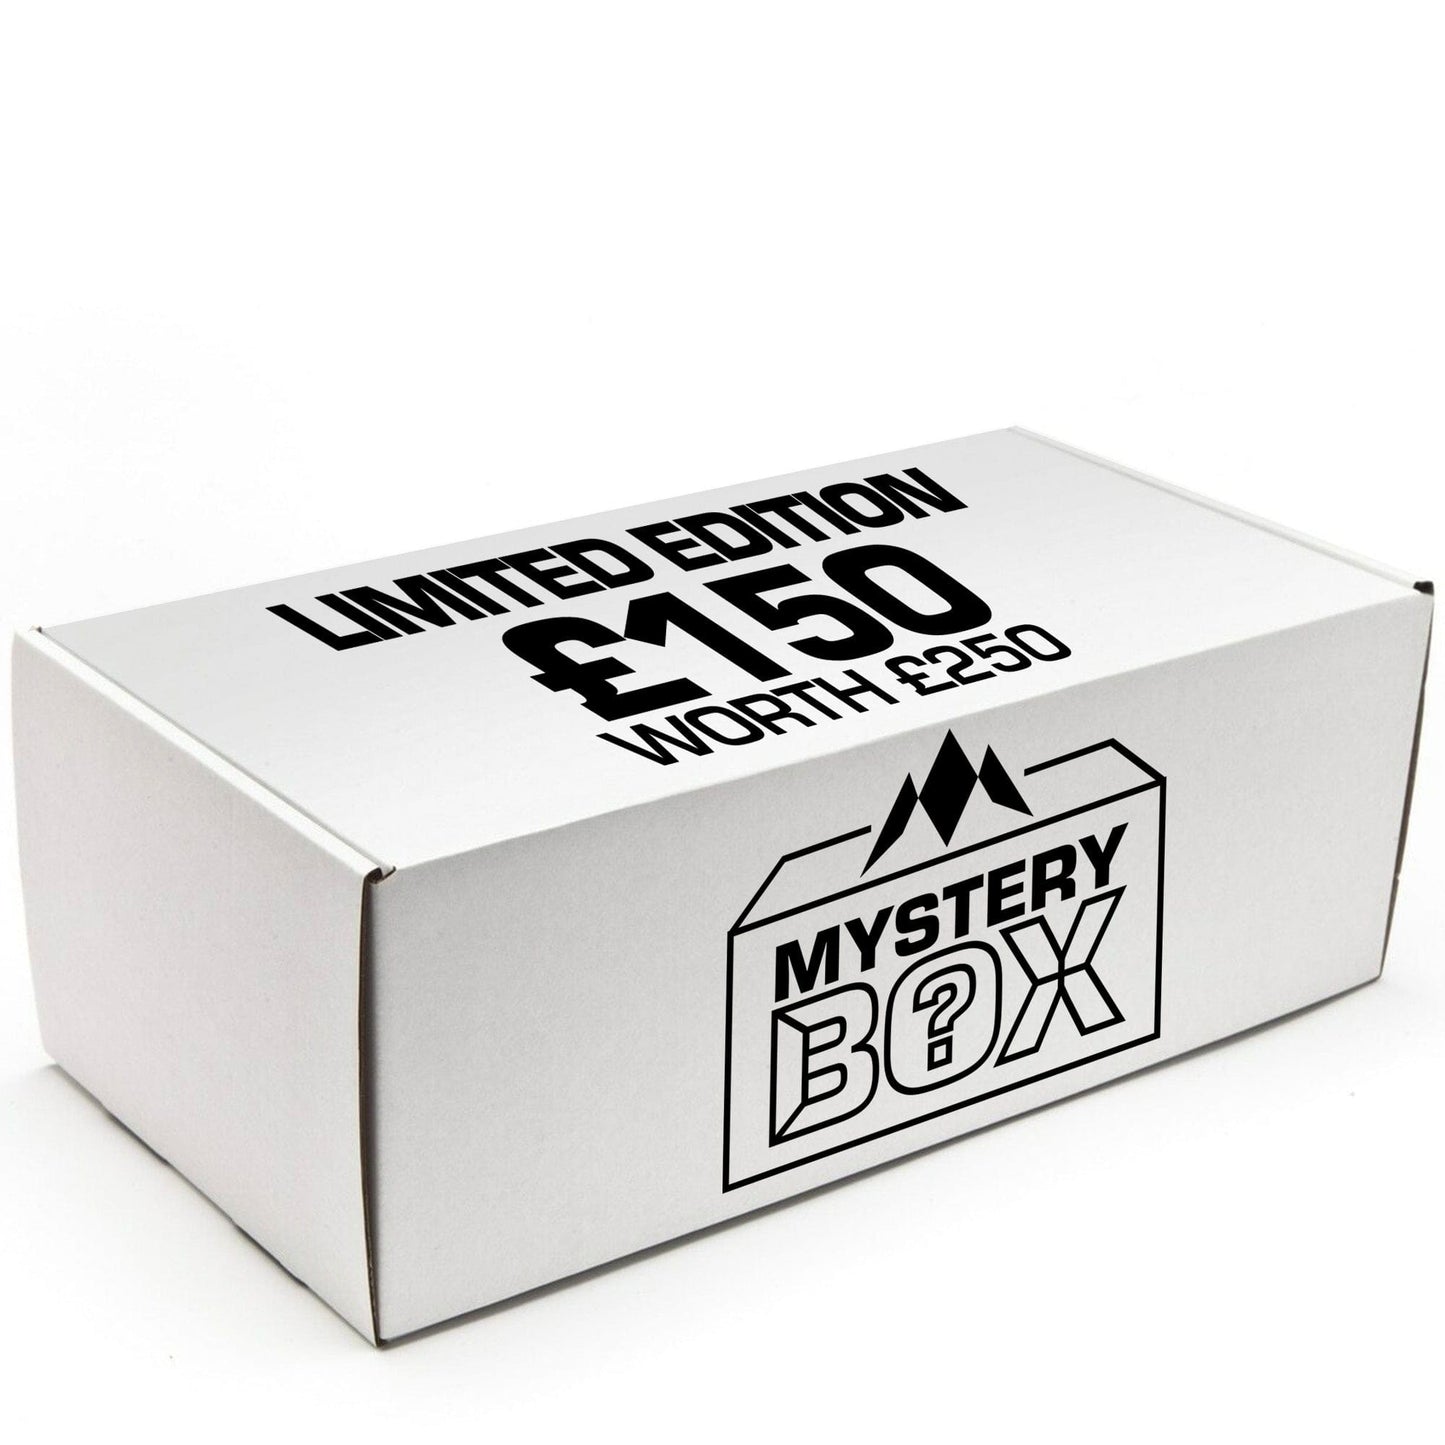 Mission Mystery Box - Darts & Accessories - Worth £250